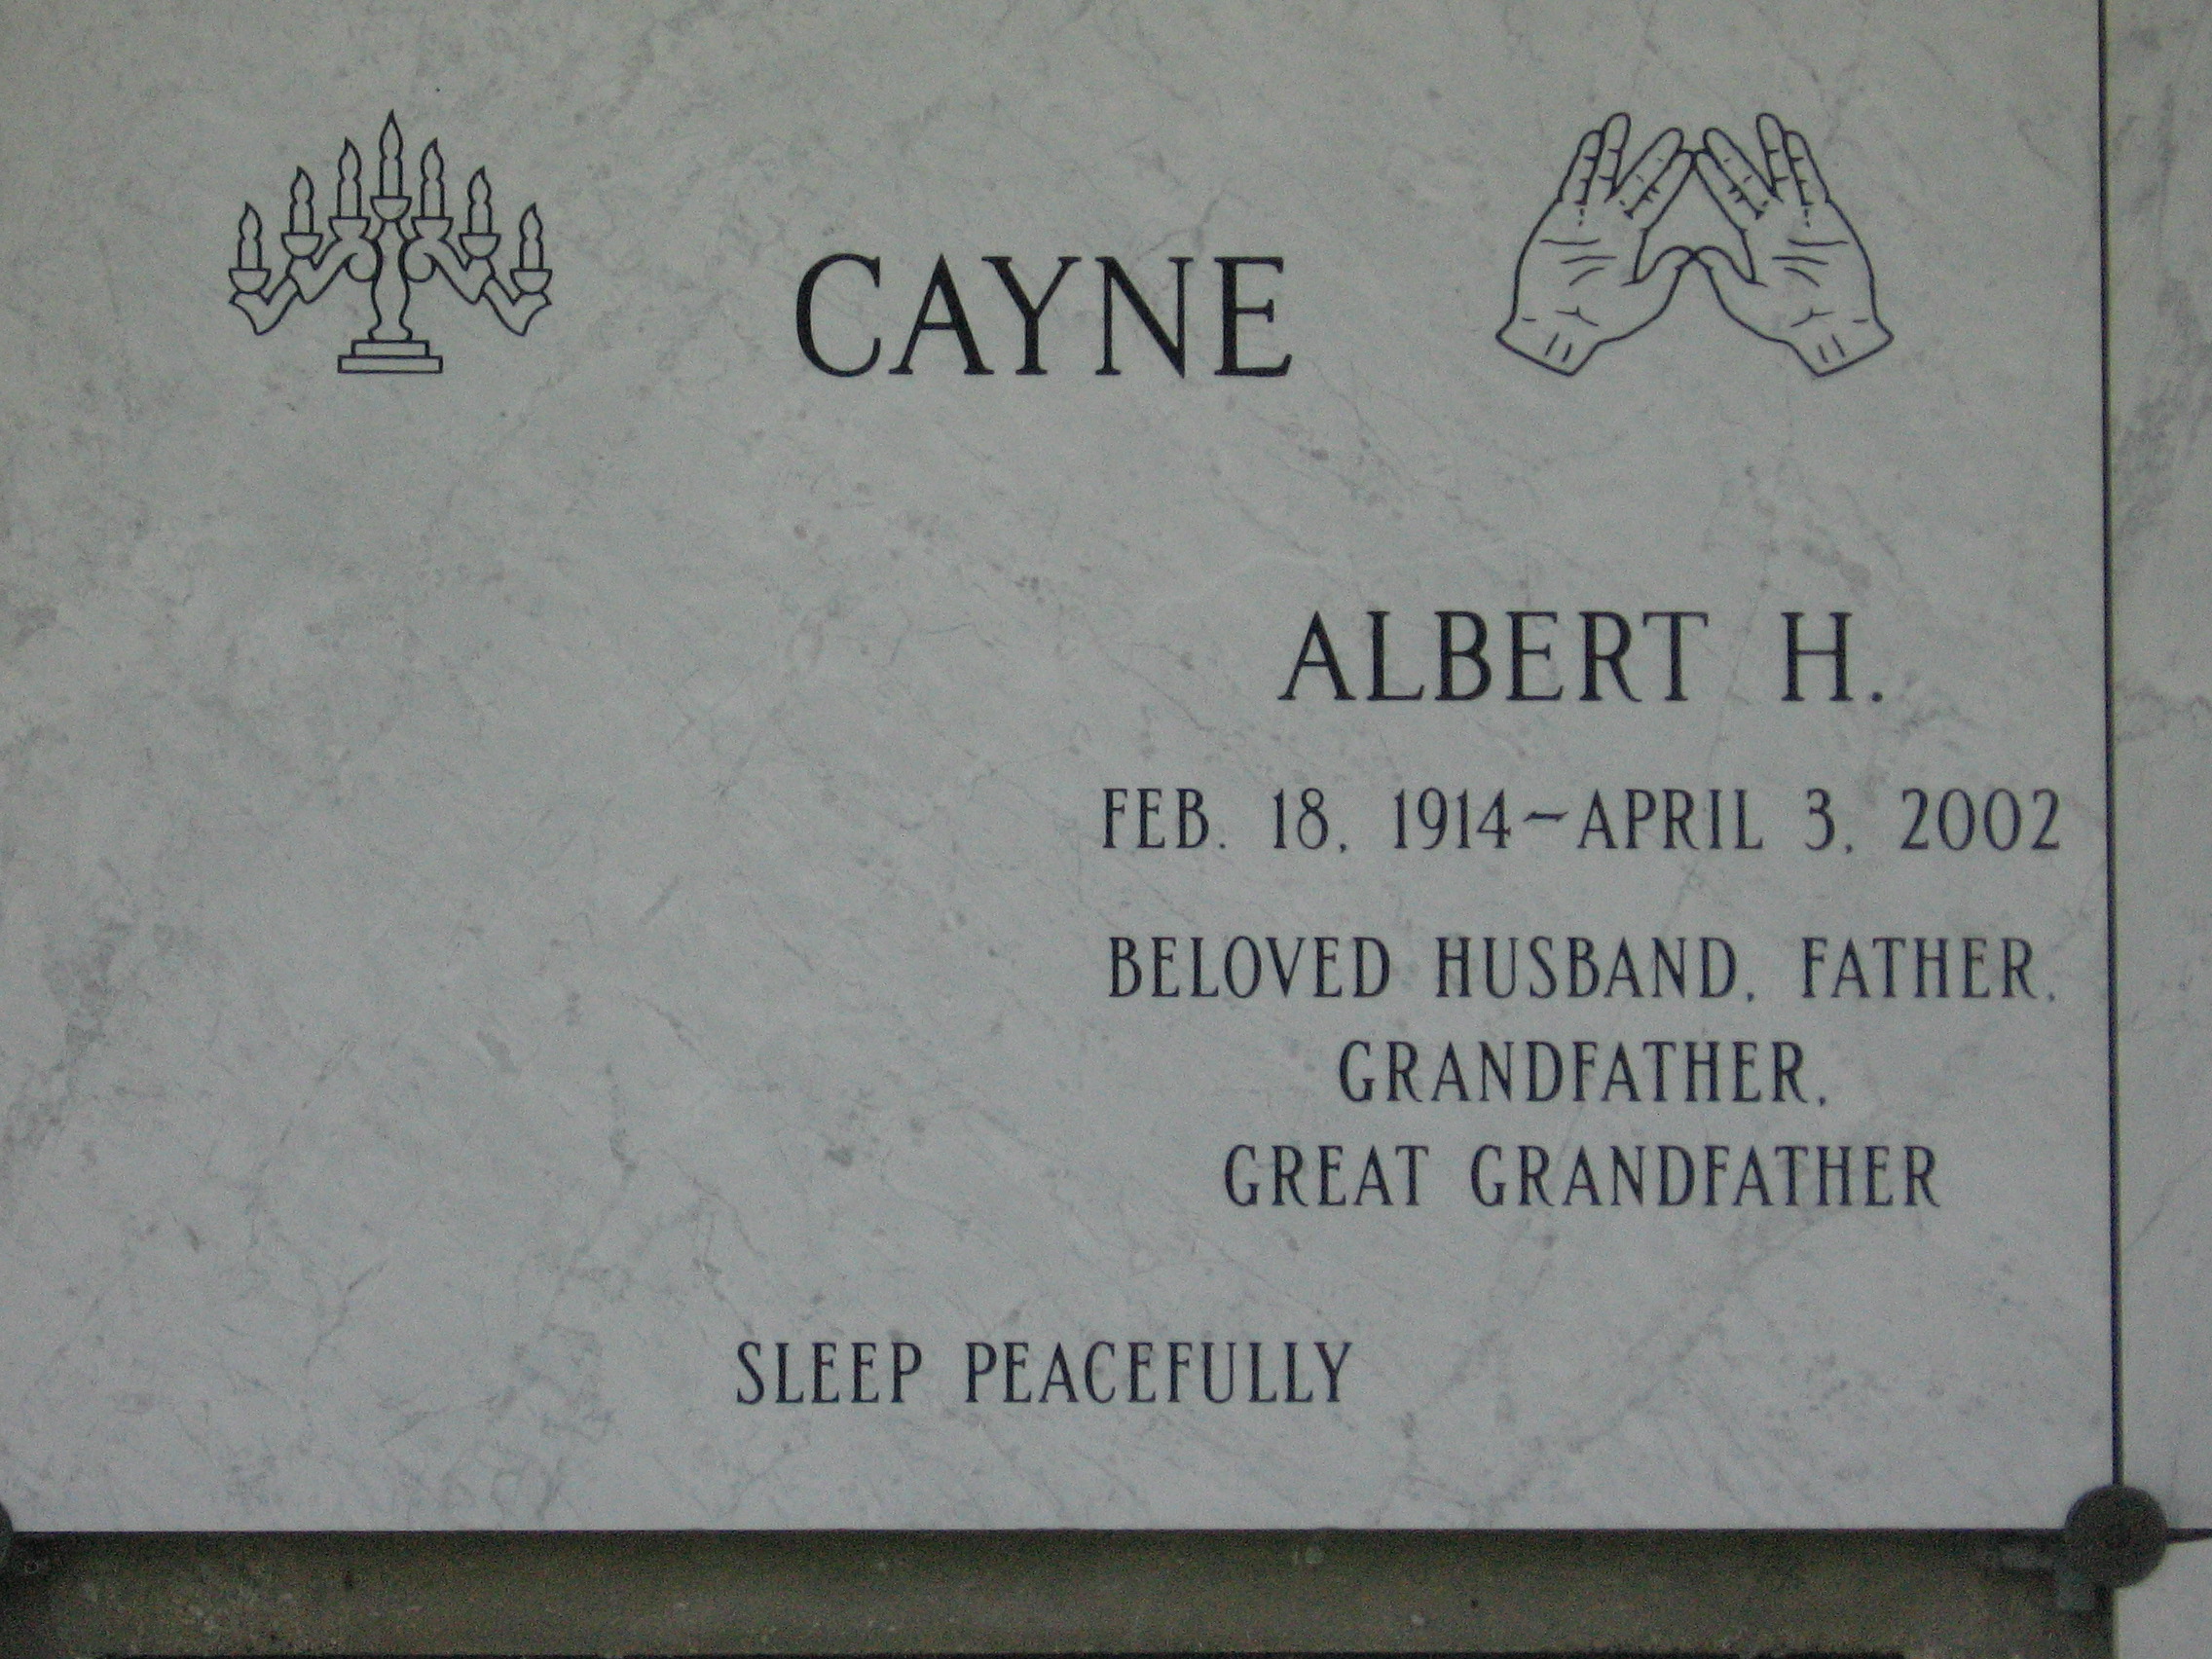 Albert H Cayne